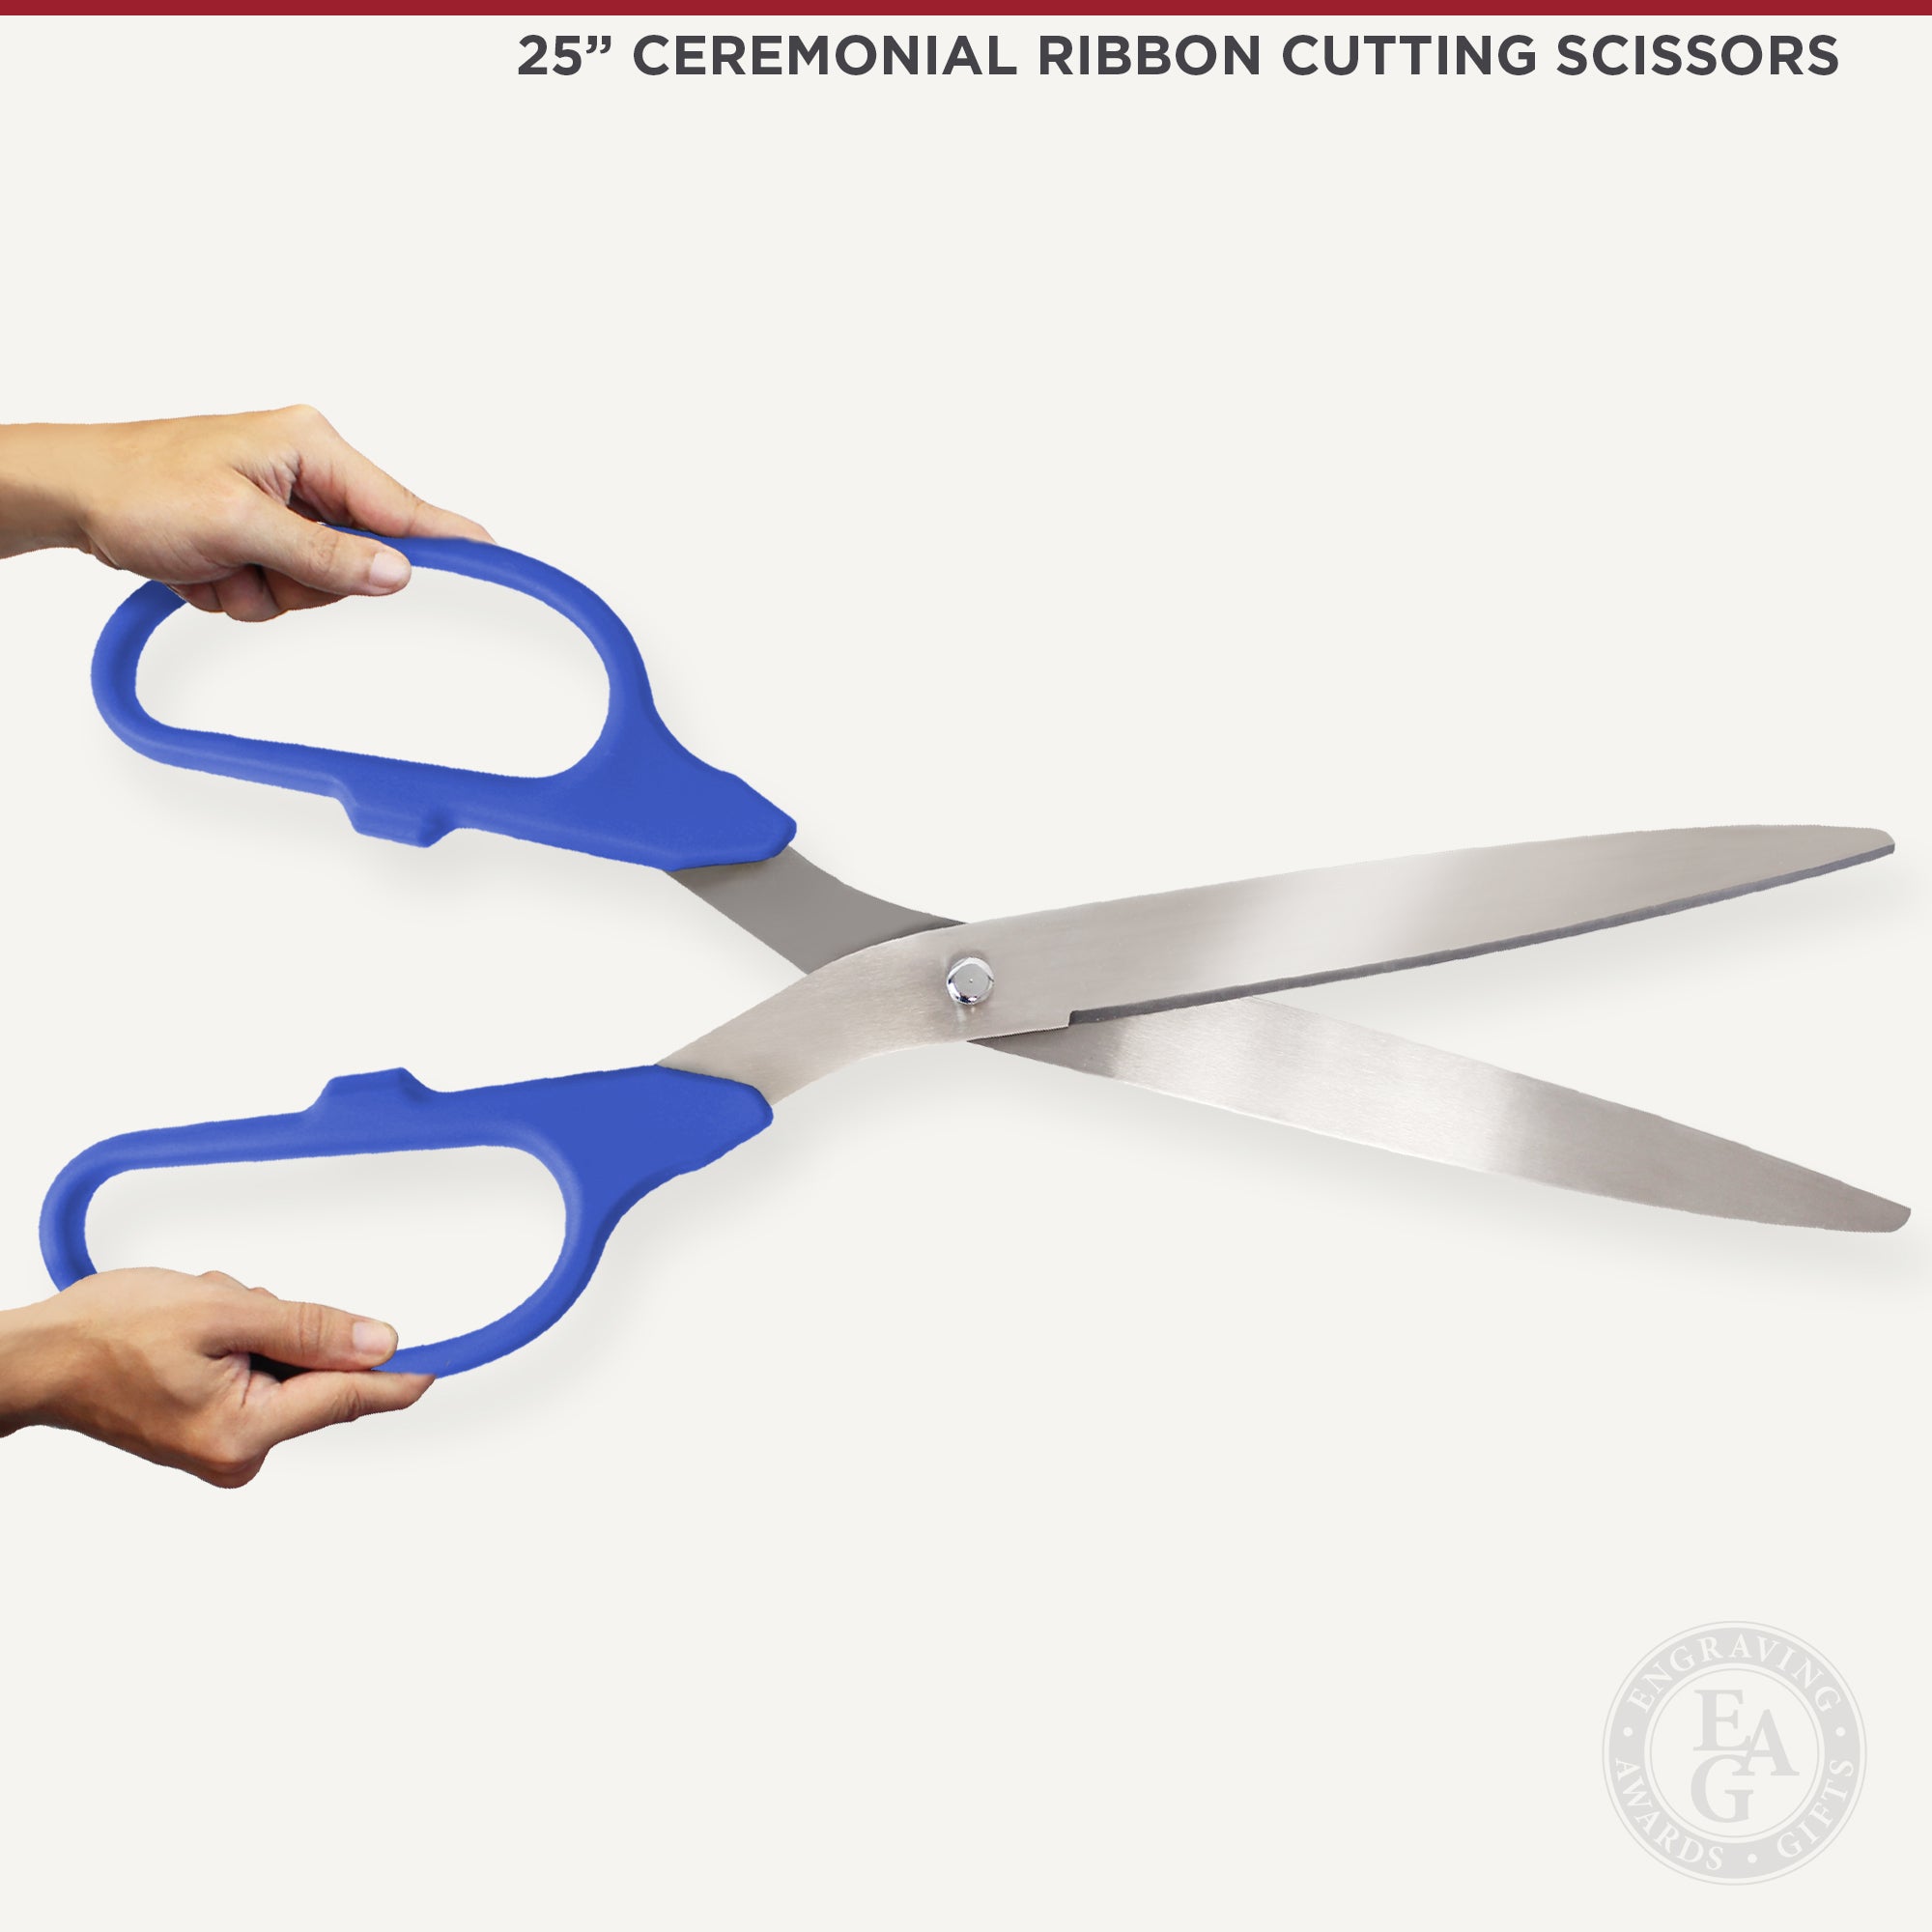 Full Custom Two-tone Ceremonial Ribbon Cutting Scissors